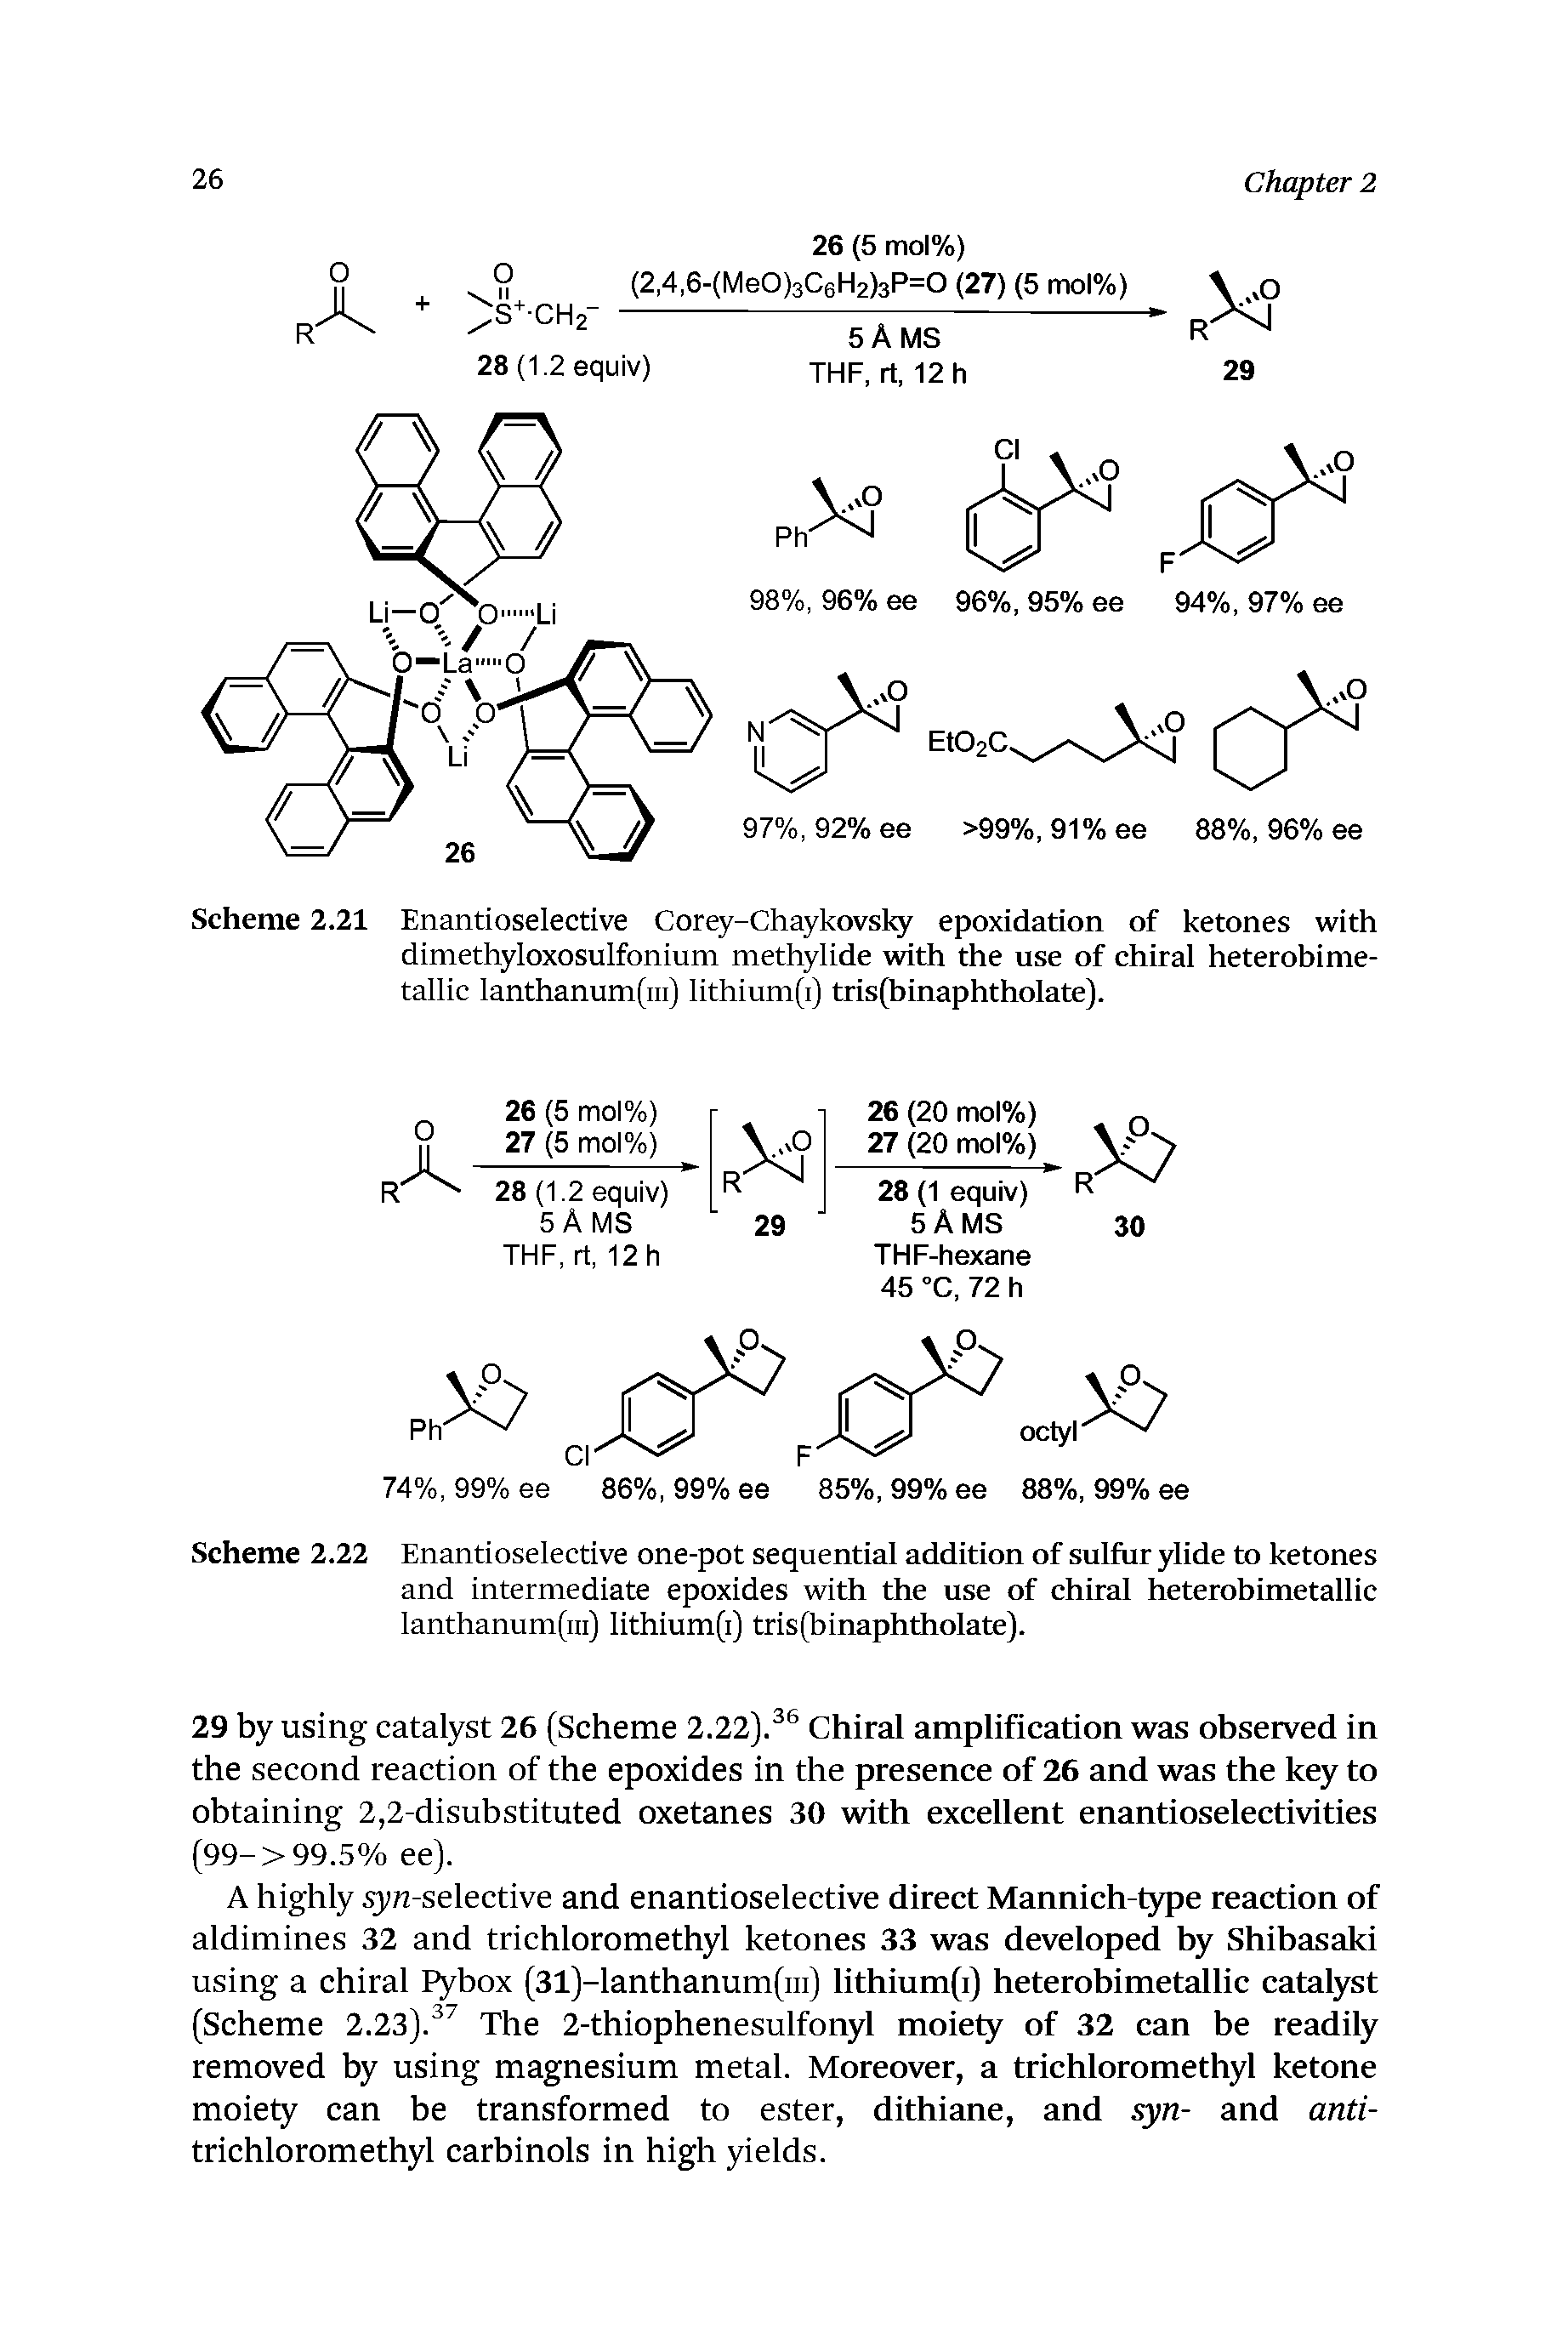 Scheme 2.21 Enantioselective Corey-Chaykovslqr epoxidation of ketones with dimethyloxosulfonium methylide with the use of chiral heterobime-tallic lanthanum(iii) lithium(i) tris(binaphtholate).